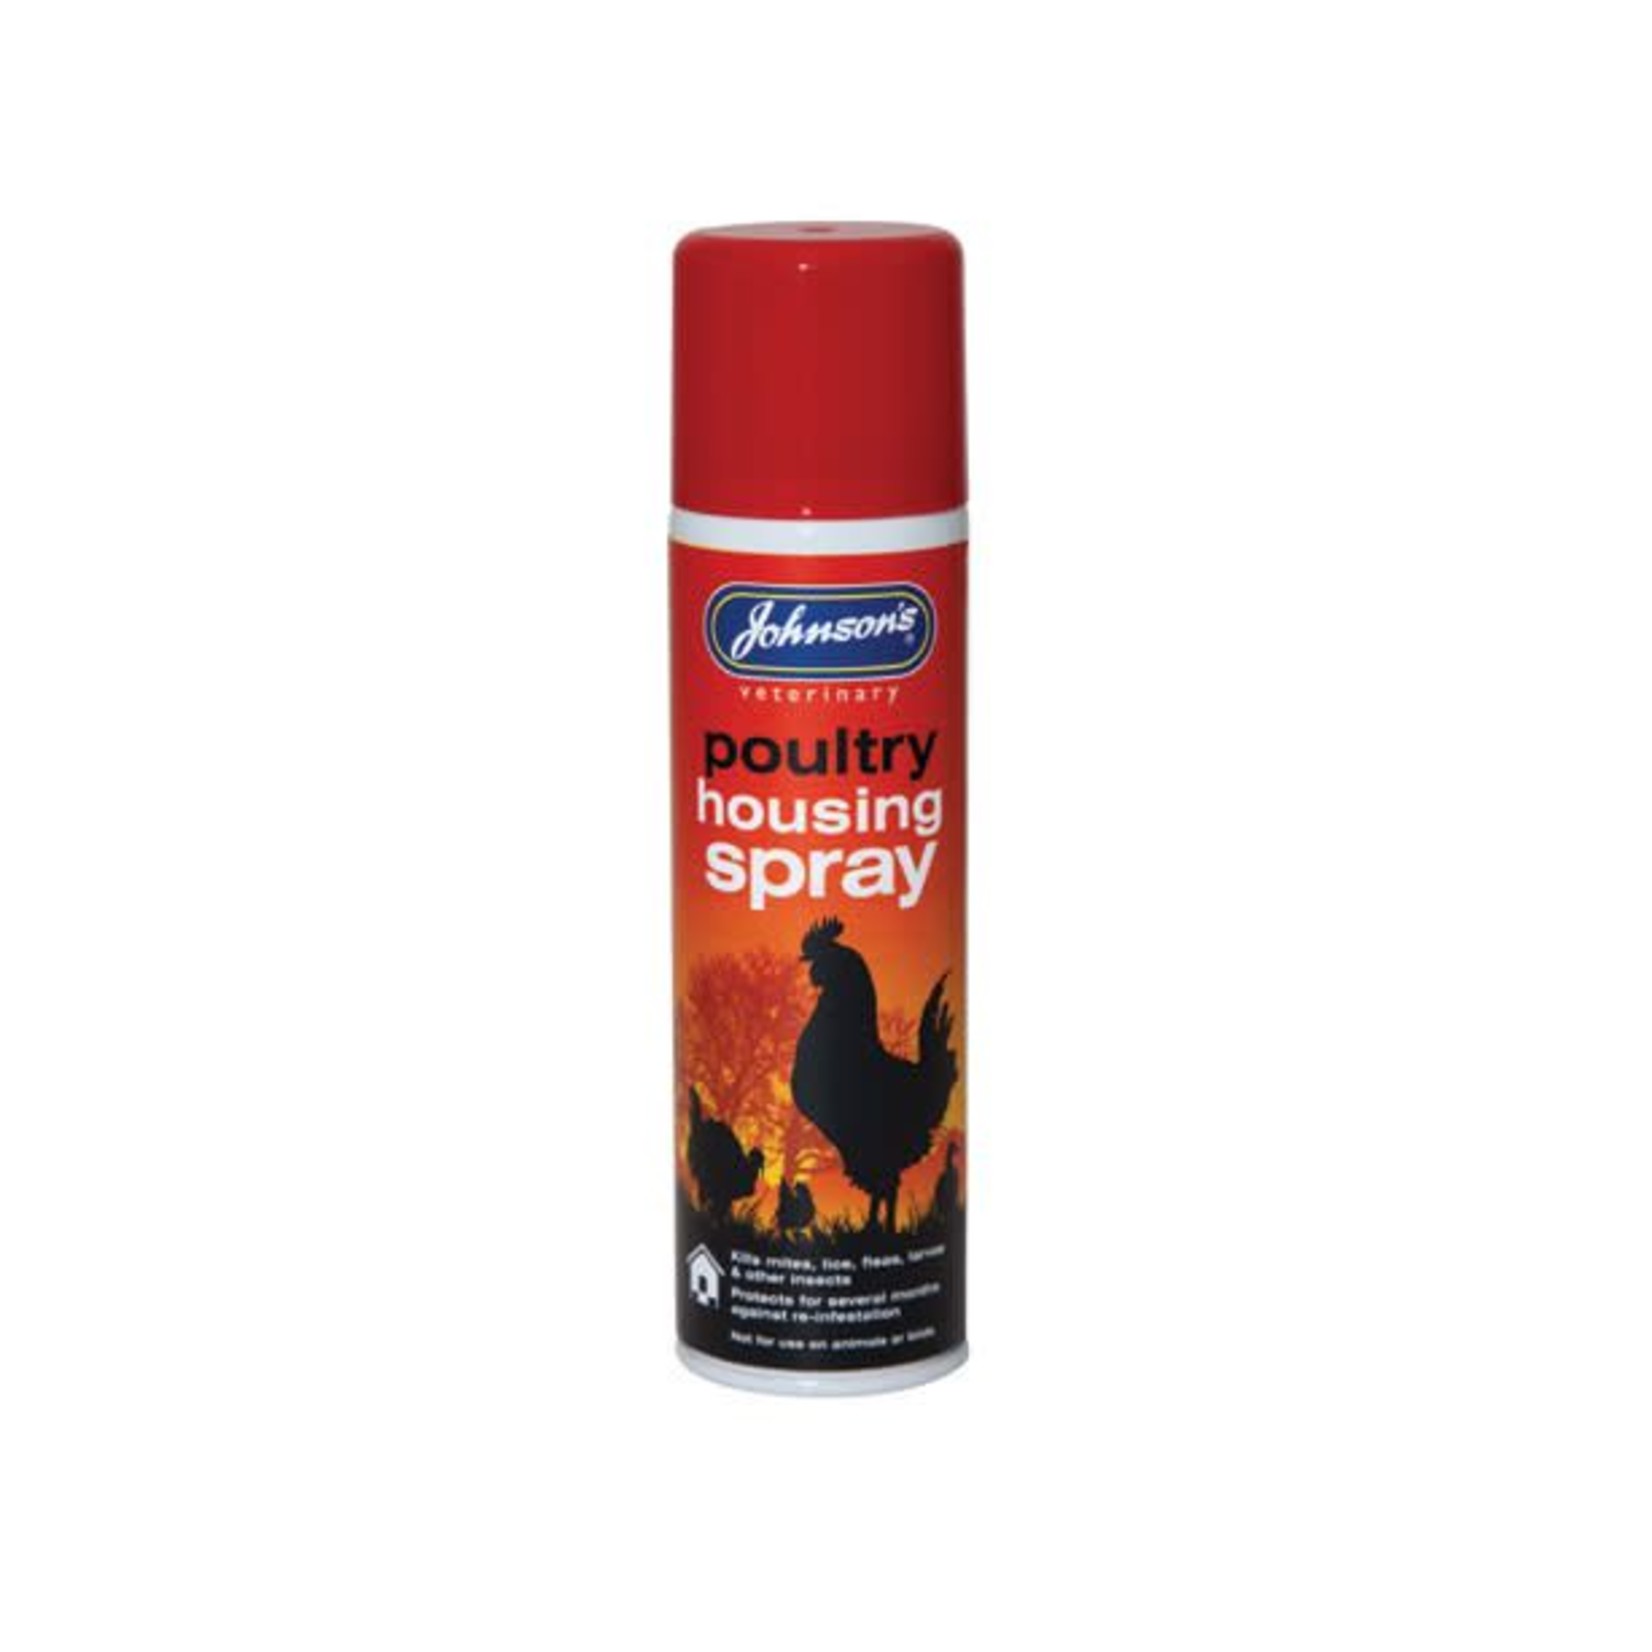 Johnson's Veterinary Poultry Housing Spray, 250ml